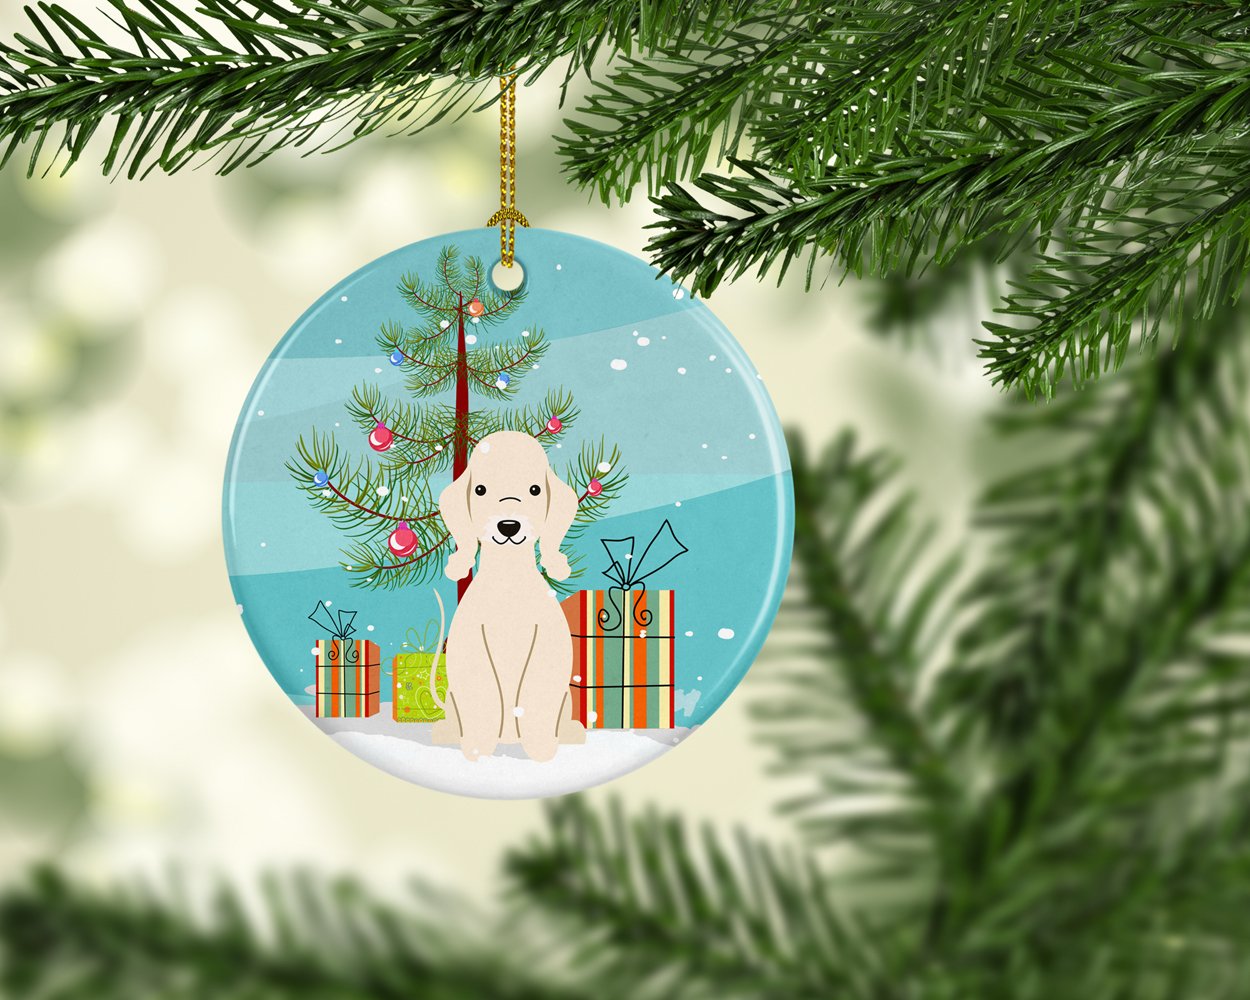 Merry Christmas Tree Bedlington Terrier Sandy Ceramic Ornament BB4216CO1 by Caroline's Treasures